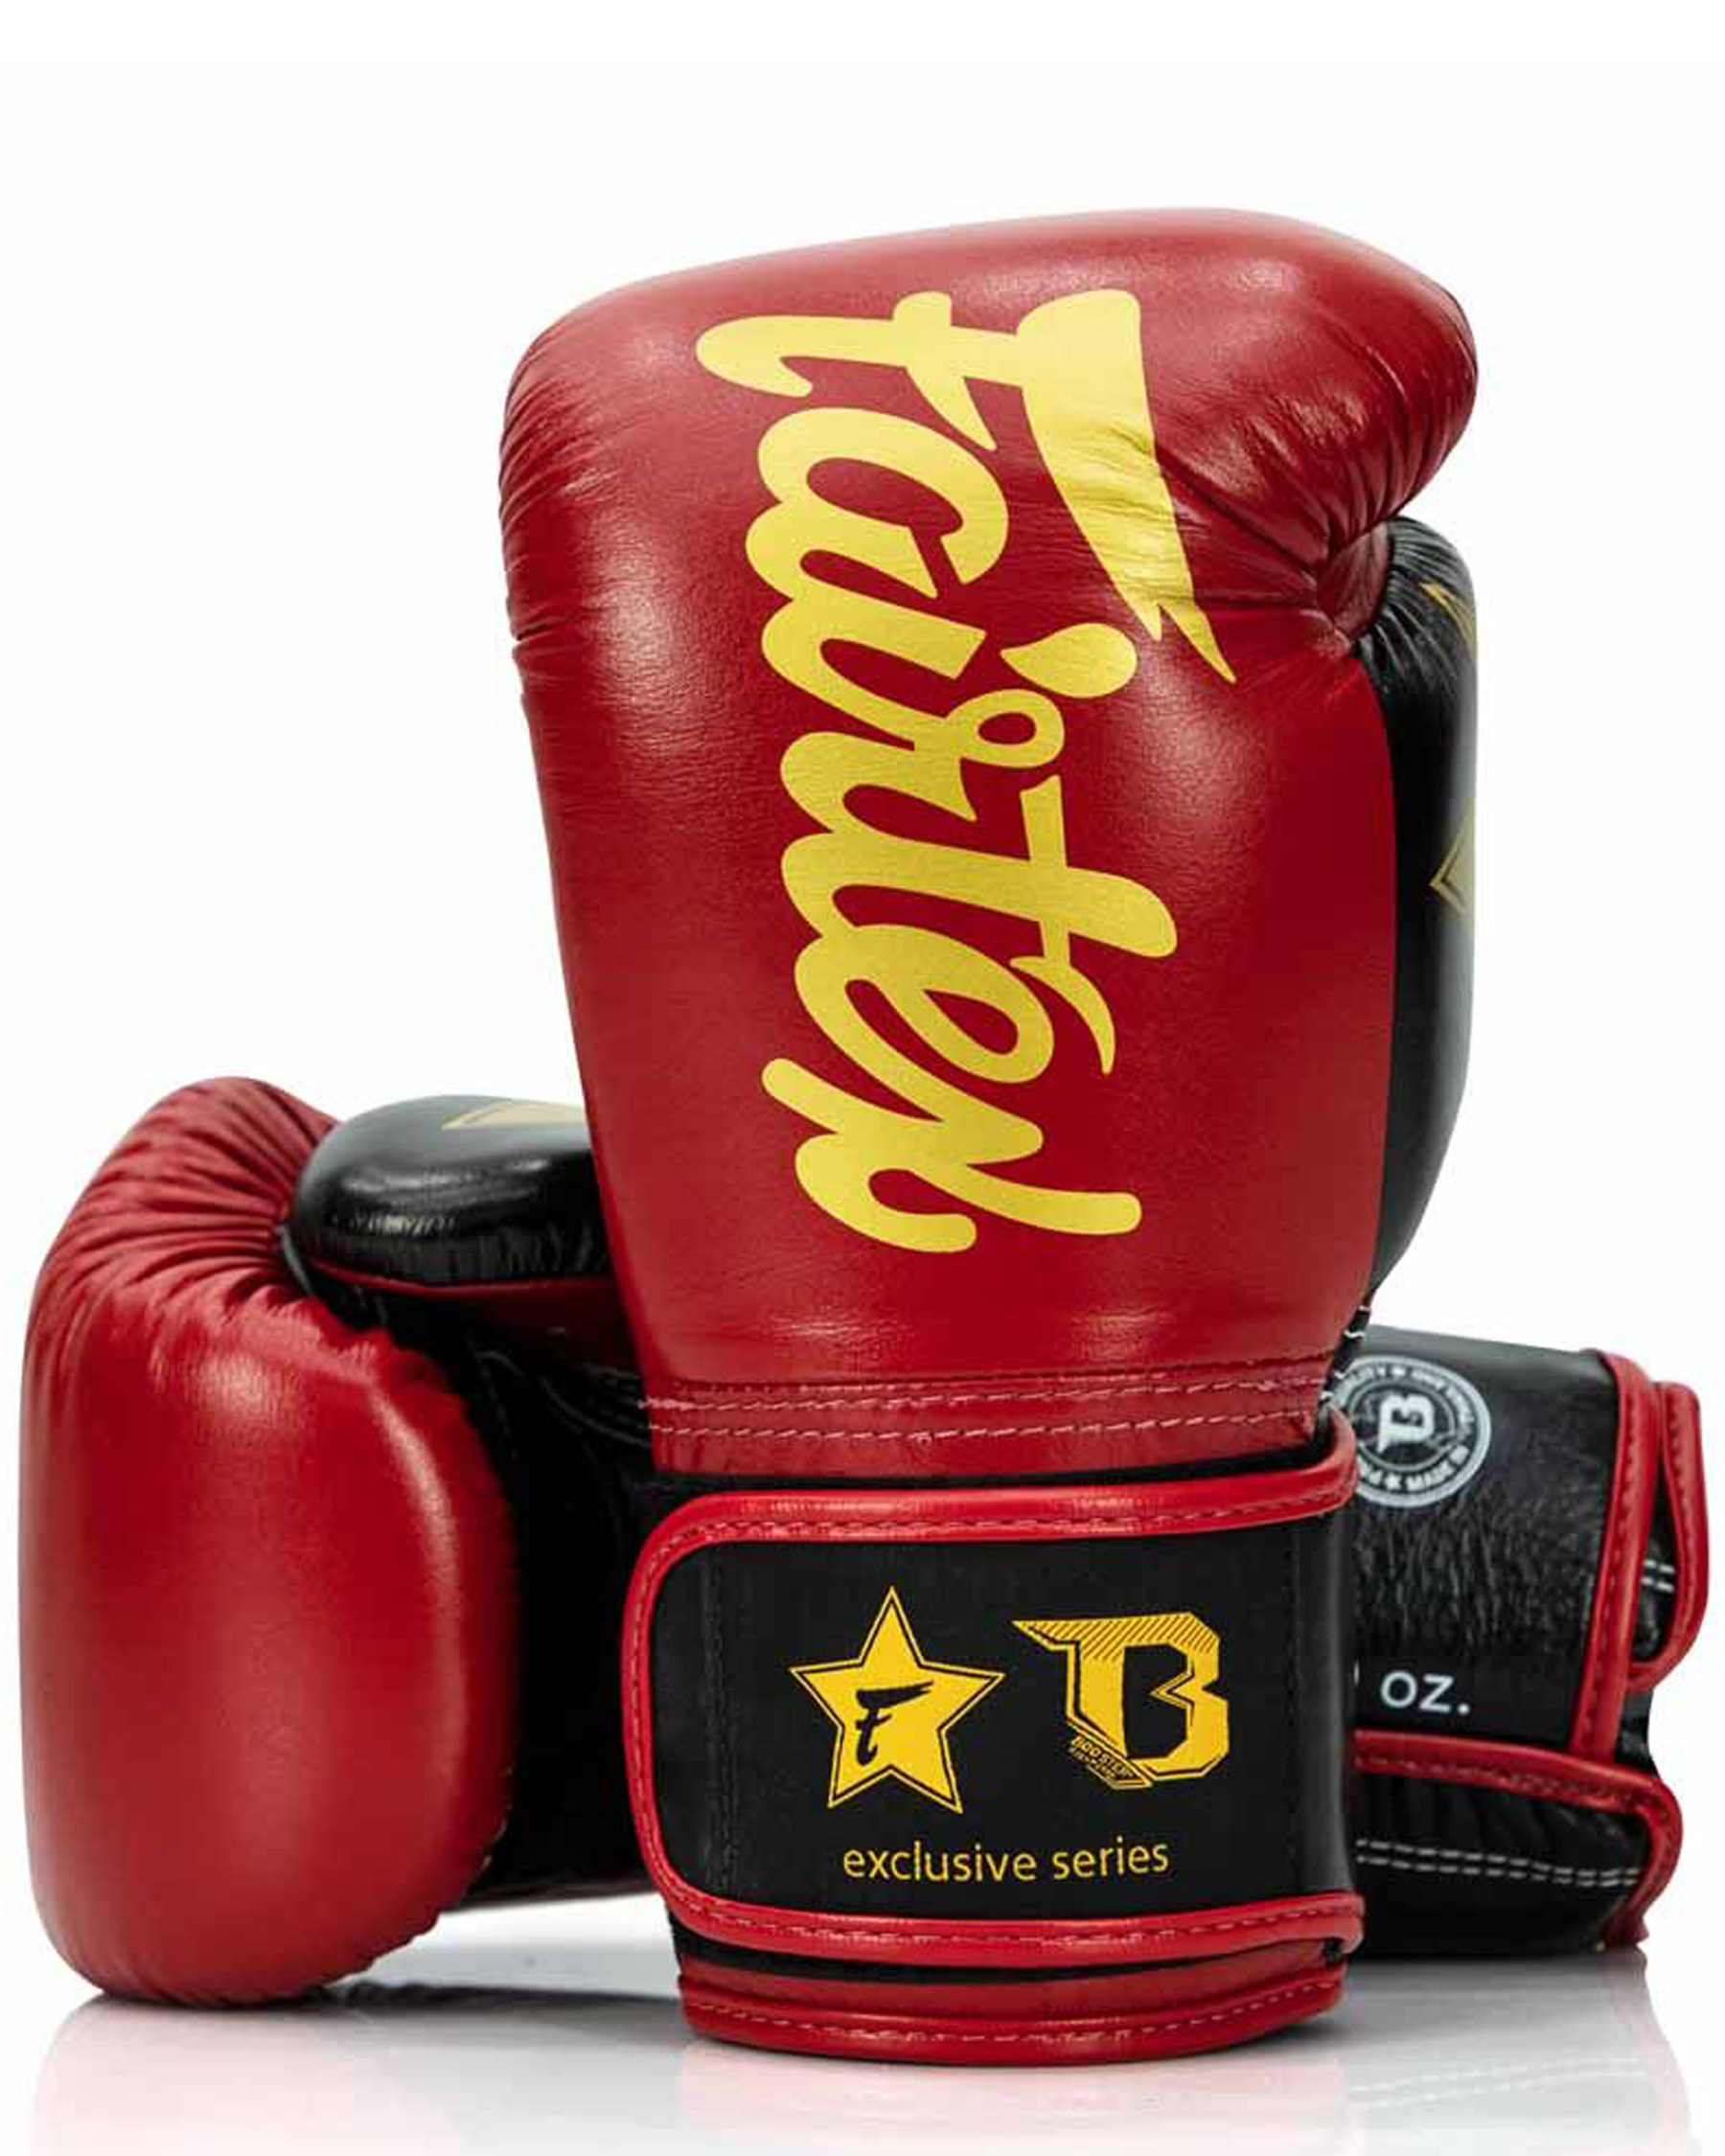 Fairtex X Booster BGVB2 Leder Boxshandschuhe in rot/schwarz/gold -  Boxhandschuhe, Trainingshandschuhe und Sparringshandschuhe - Fairtex X  Booster